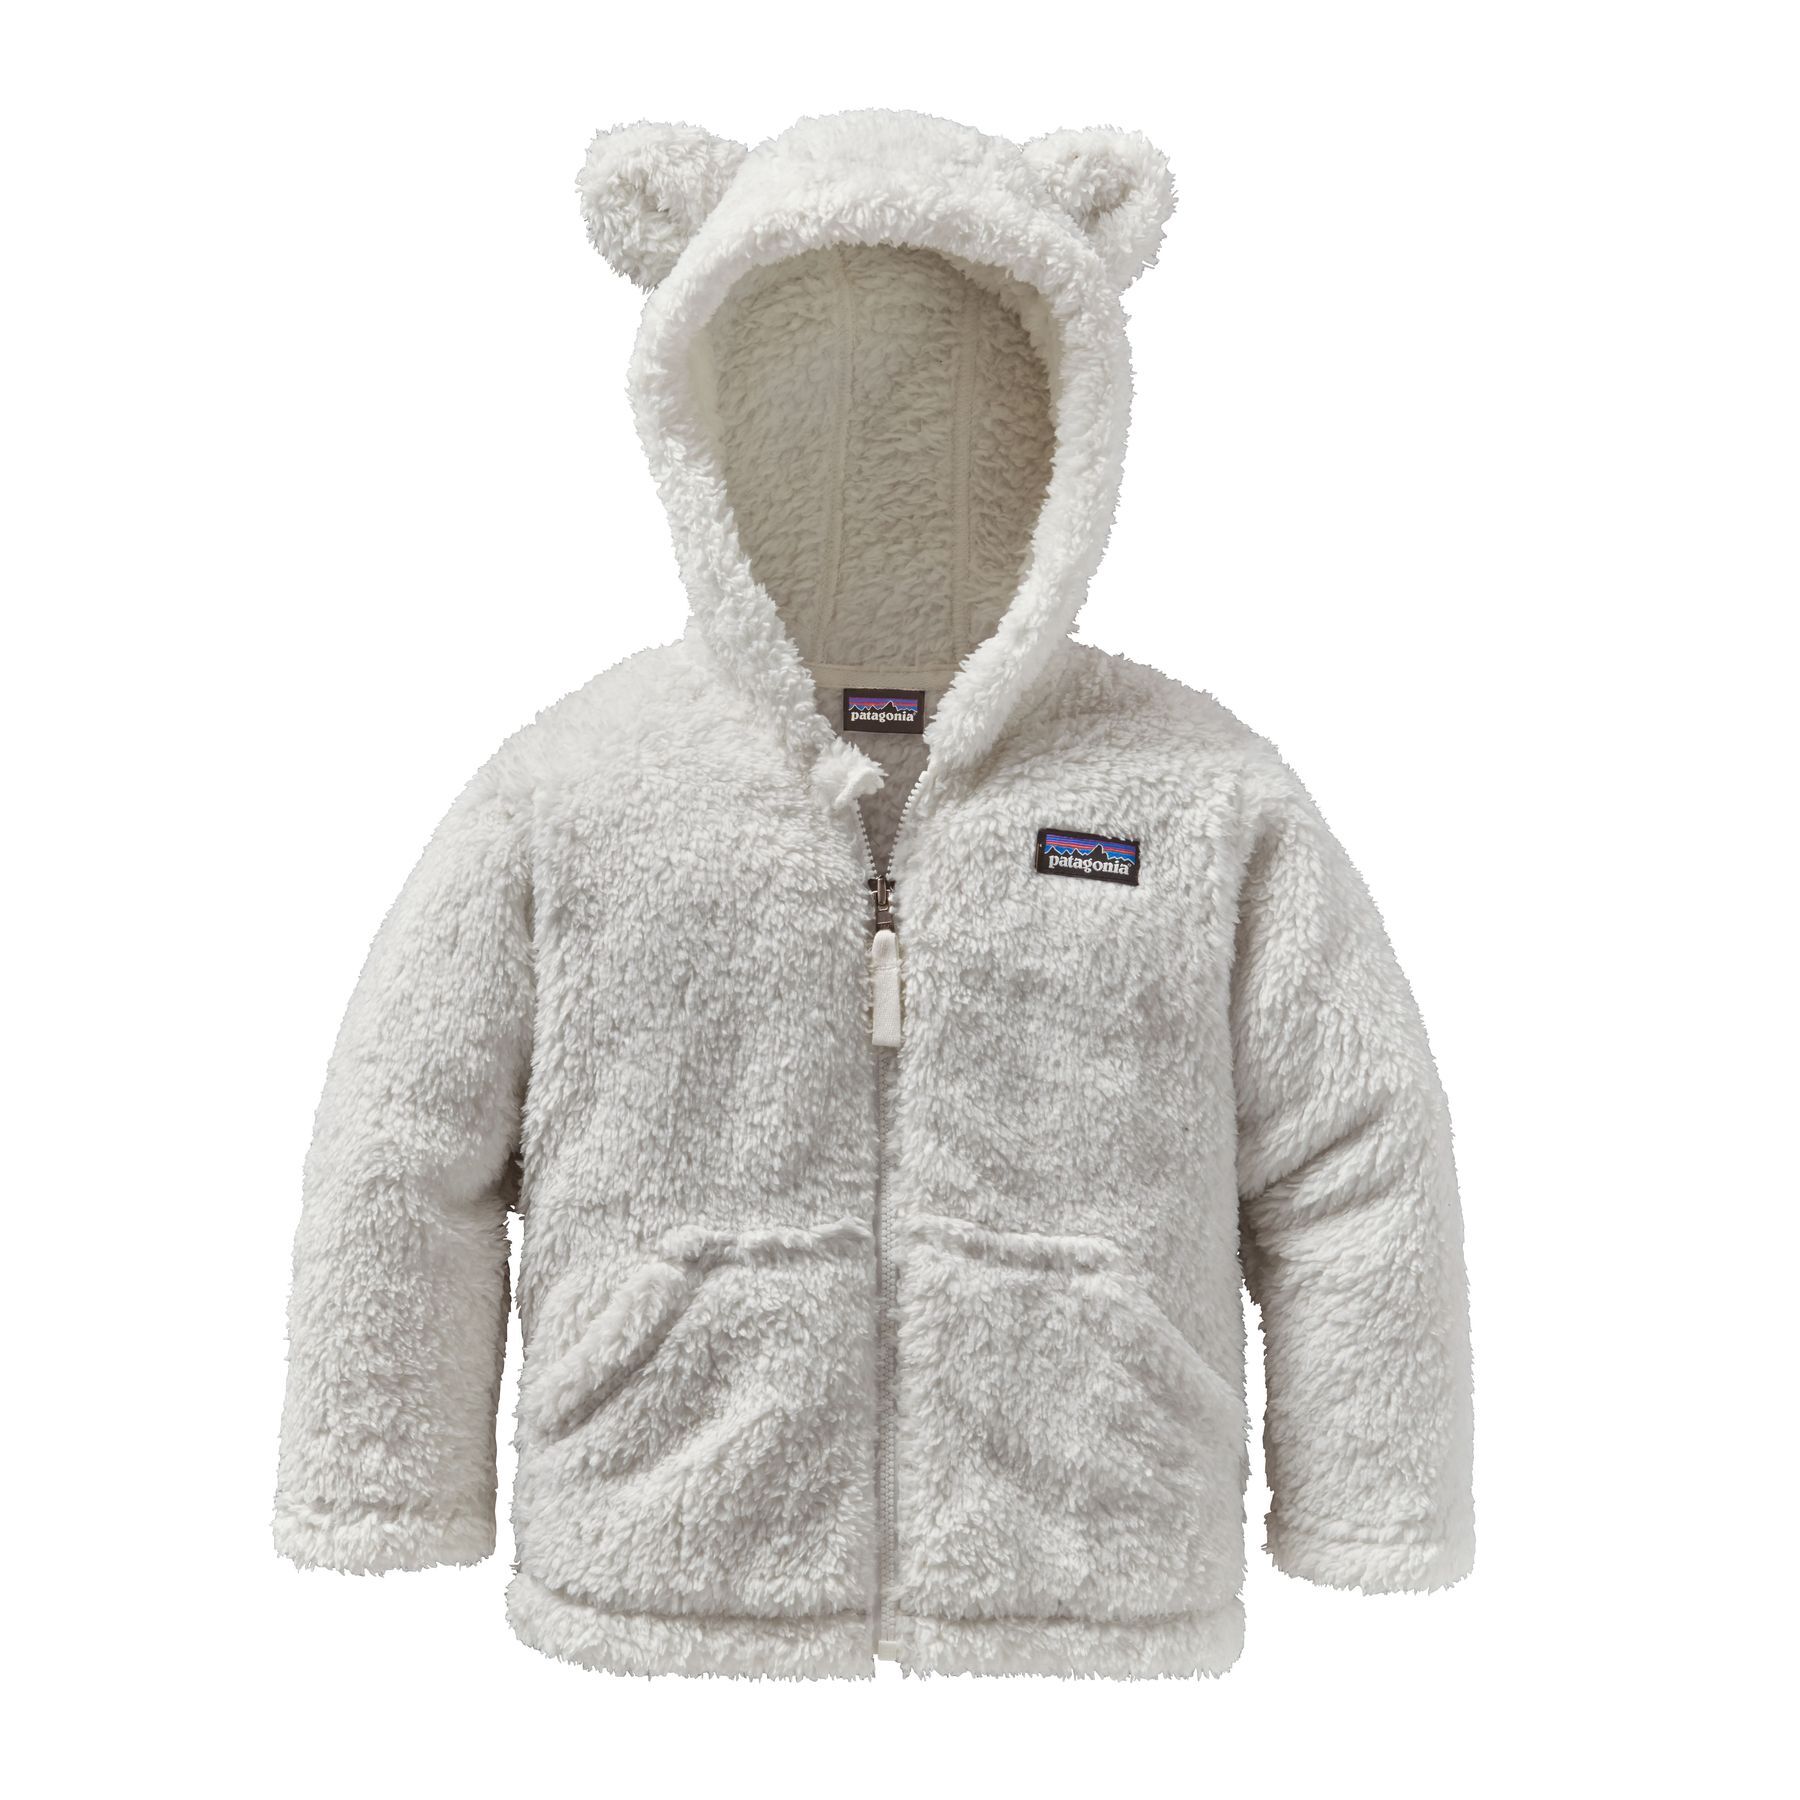 Patagonia - Baby Furry Friends Hoody - Forro polar - Niños